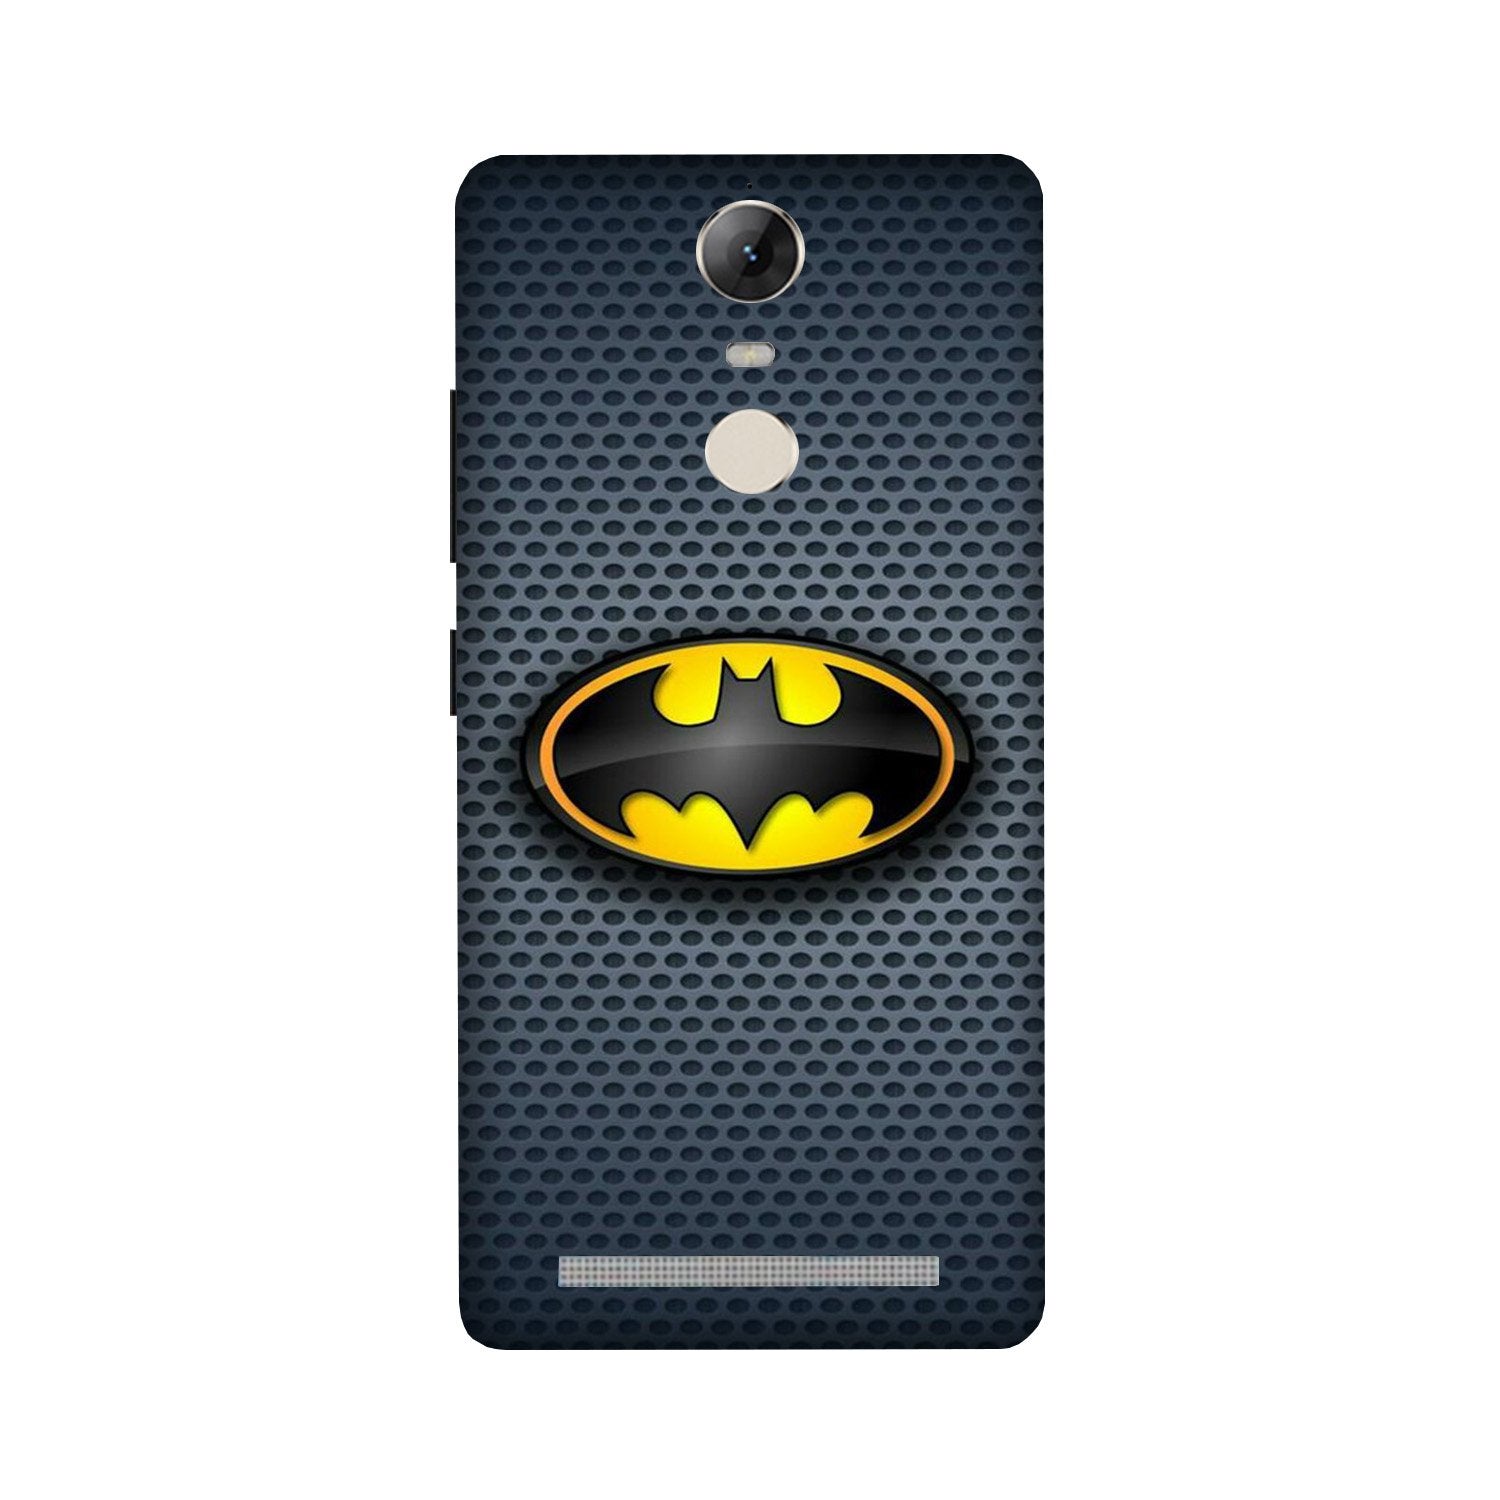 Batman Case for Lenovo Vibe K5 Note (Design No. 244)